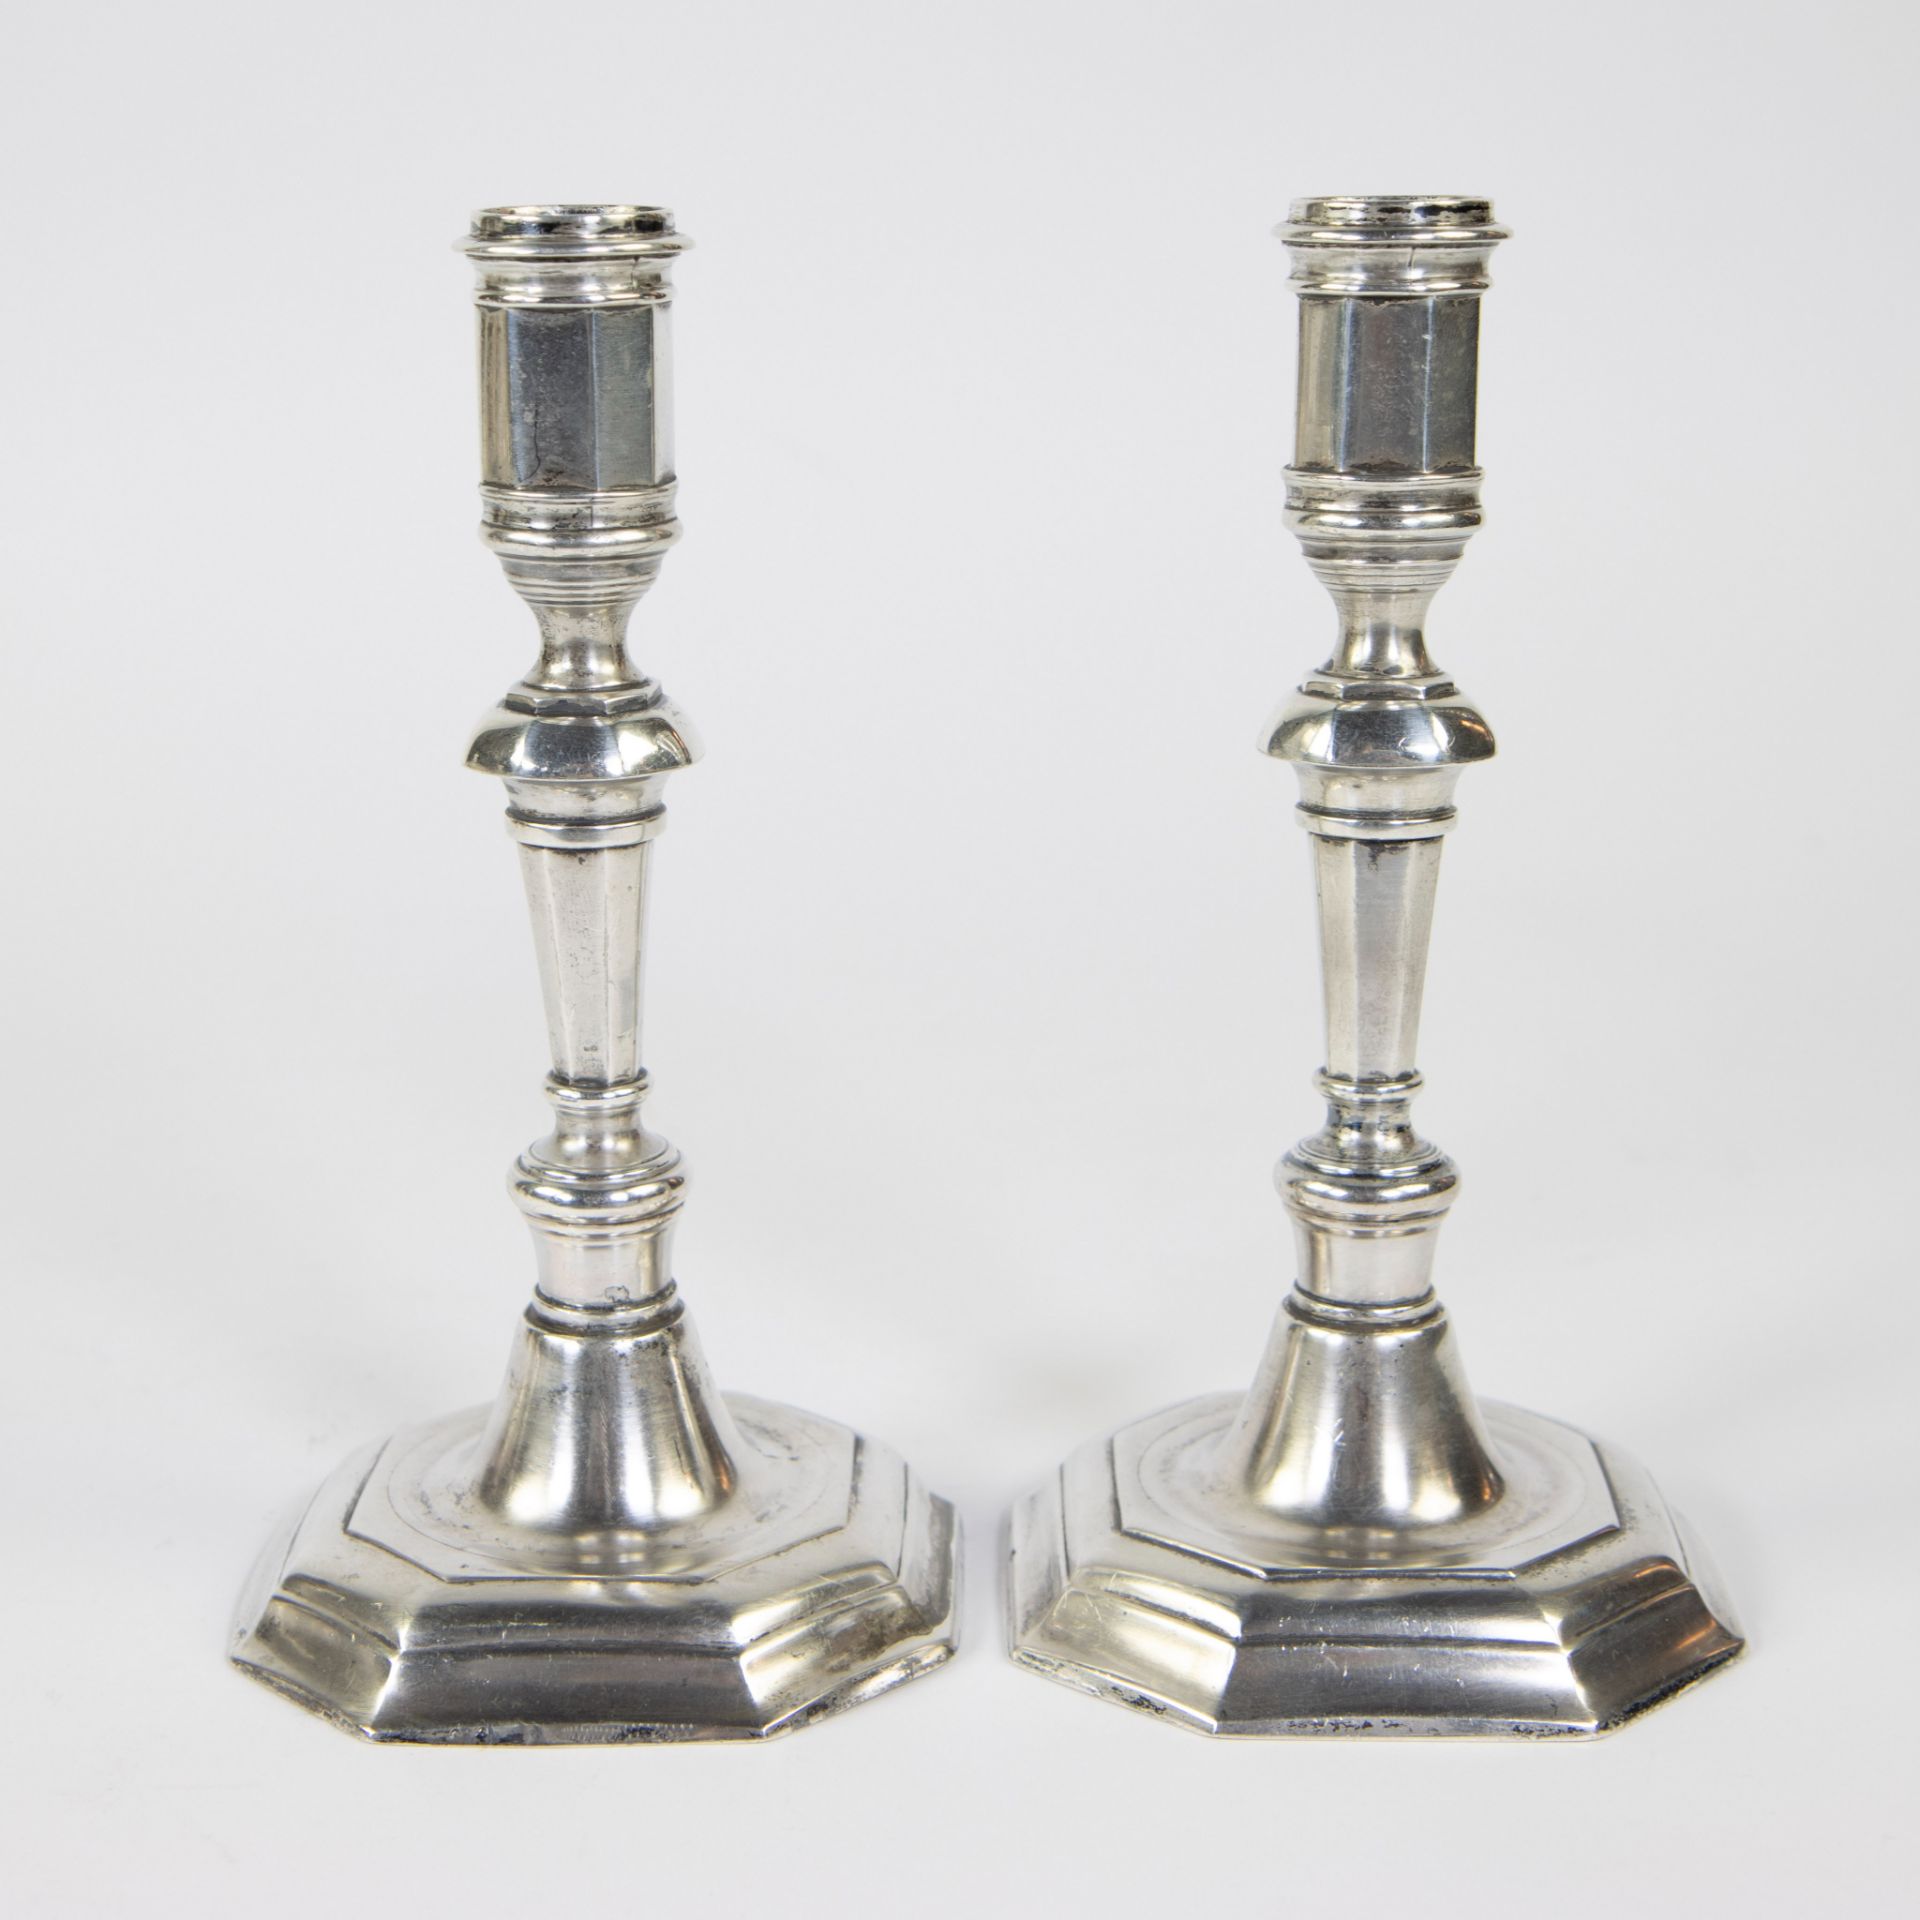 Pair of German cast silver candlesticks 18th century